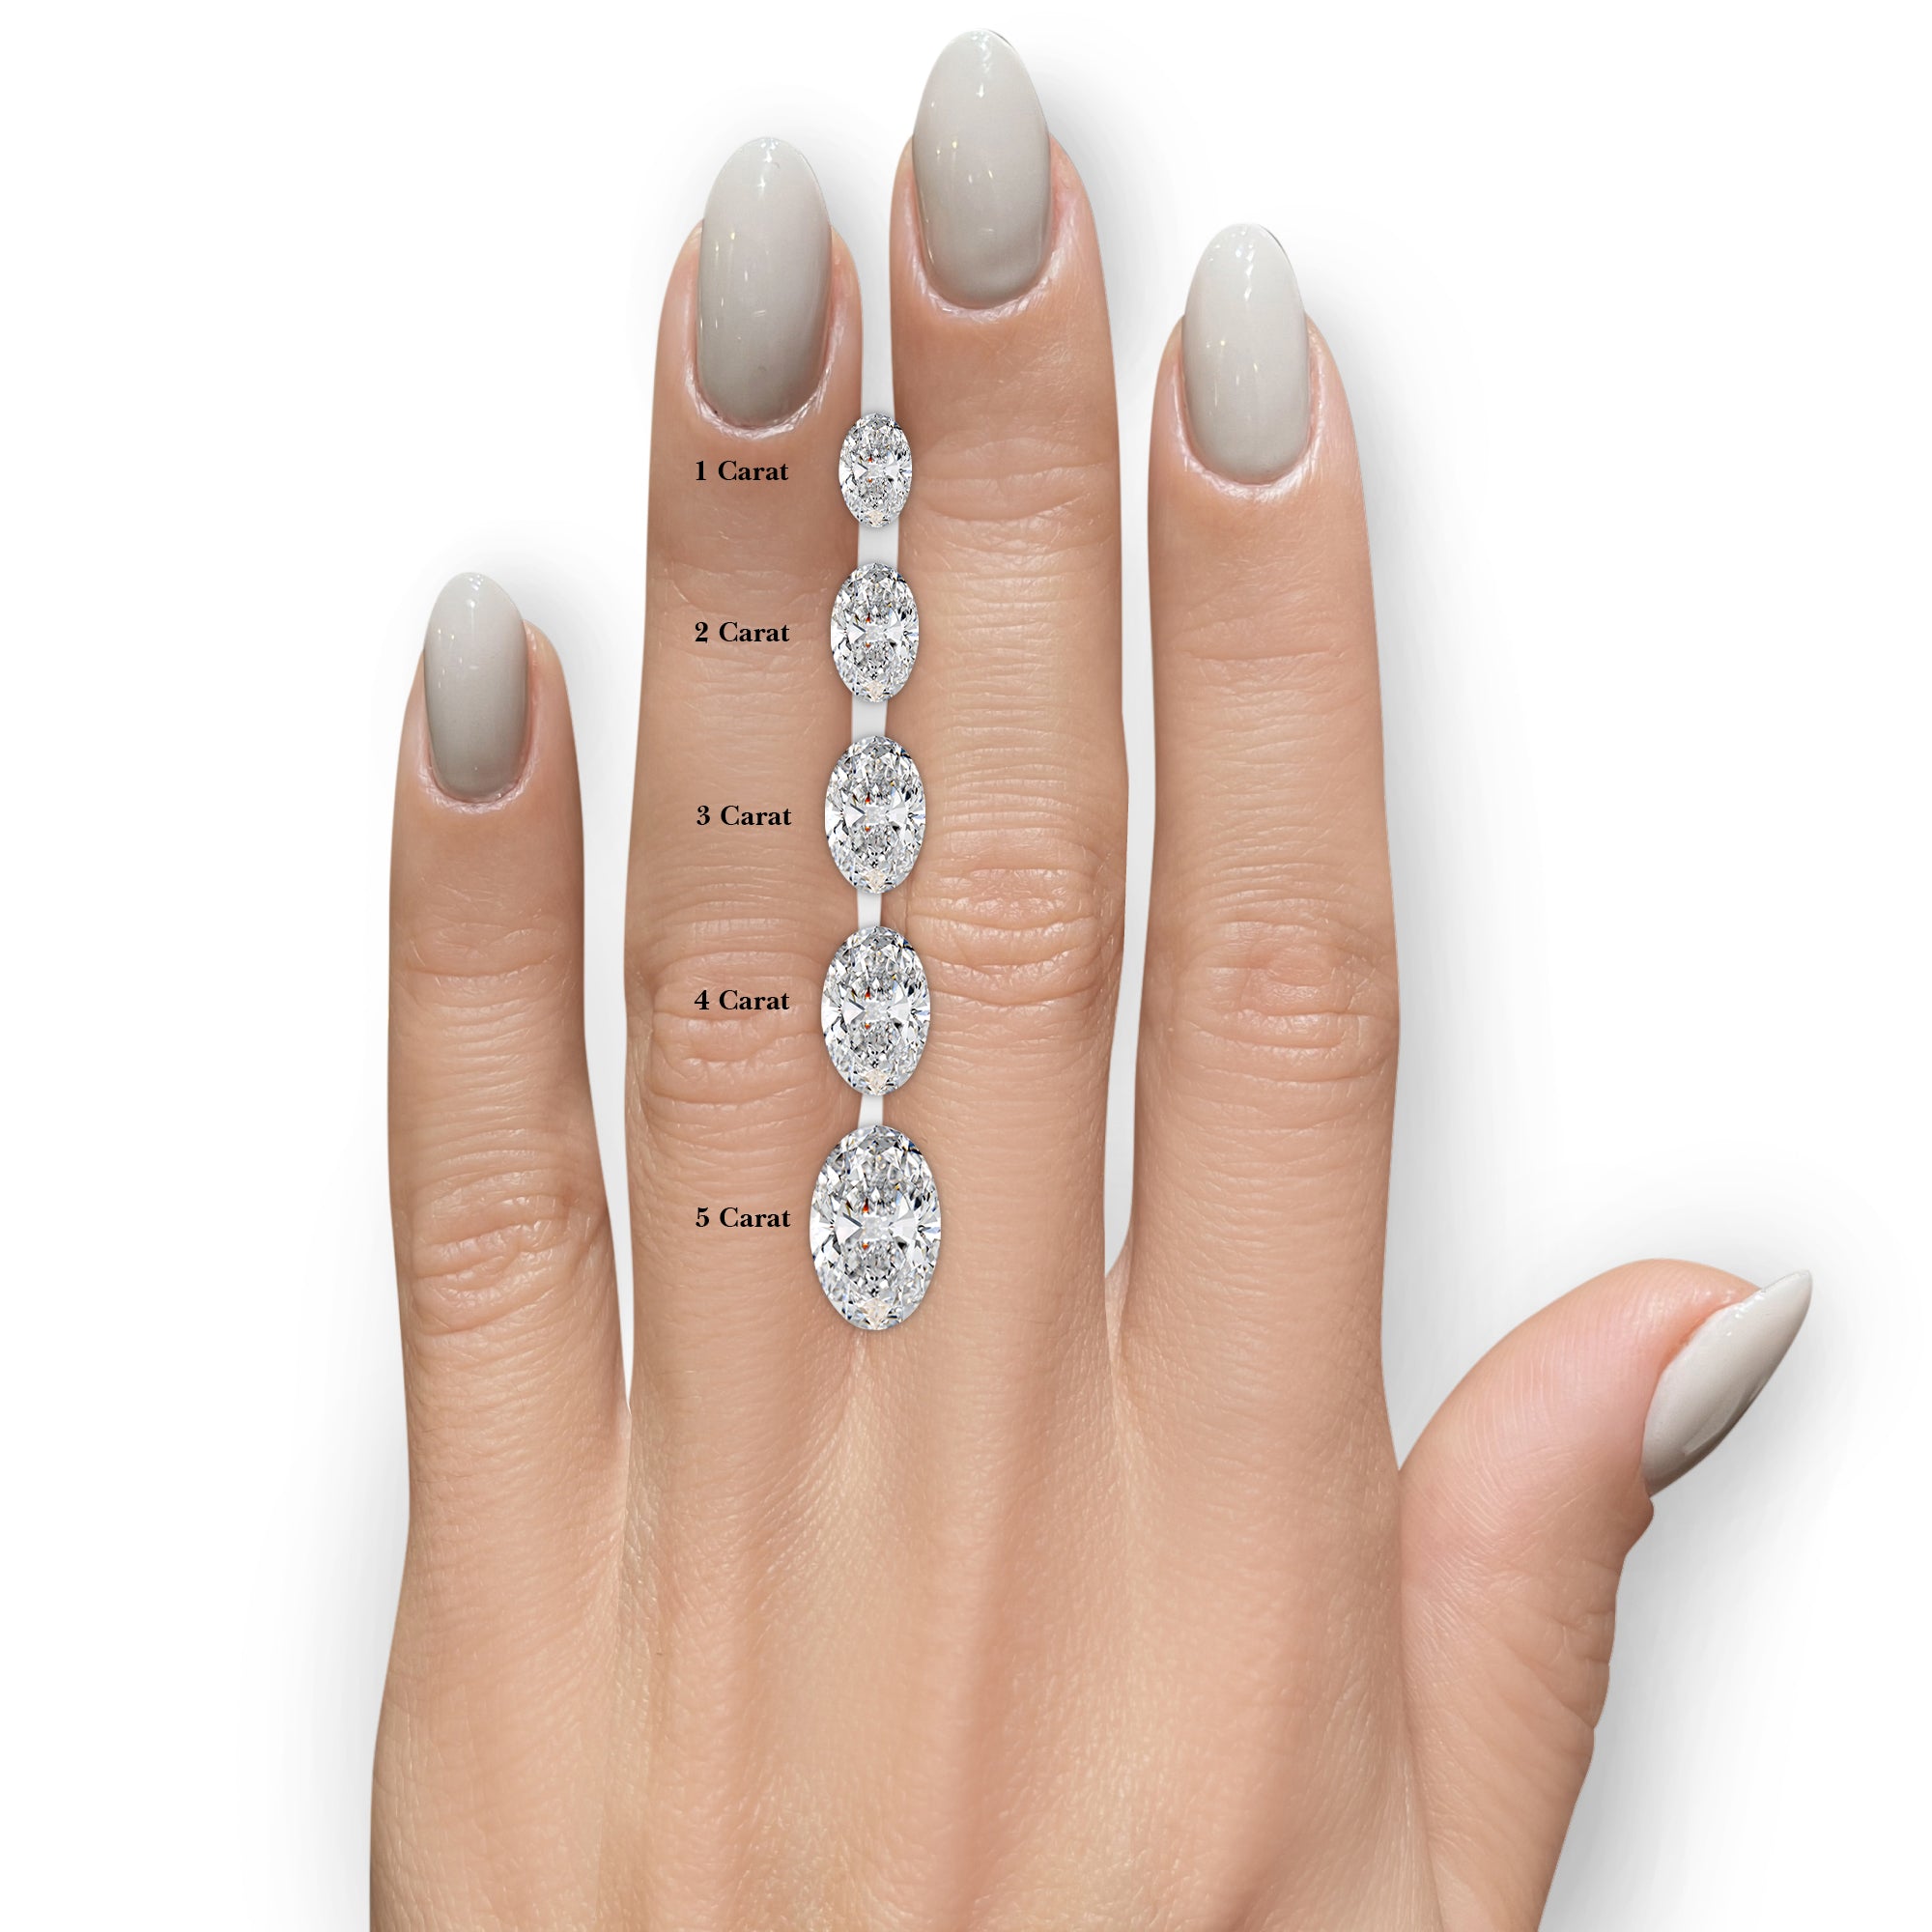 Maria Diamond Engagement Ring -14K White Gold